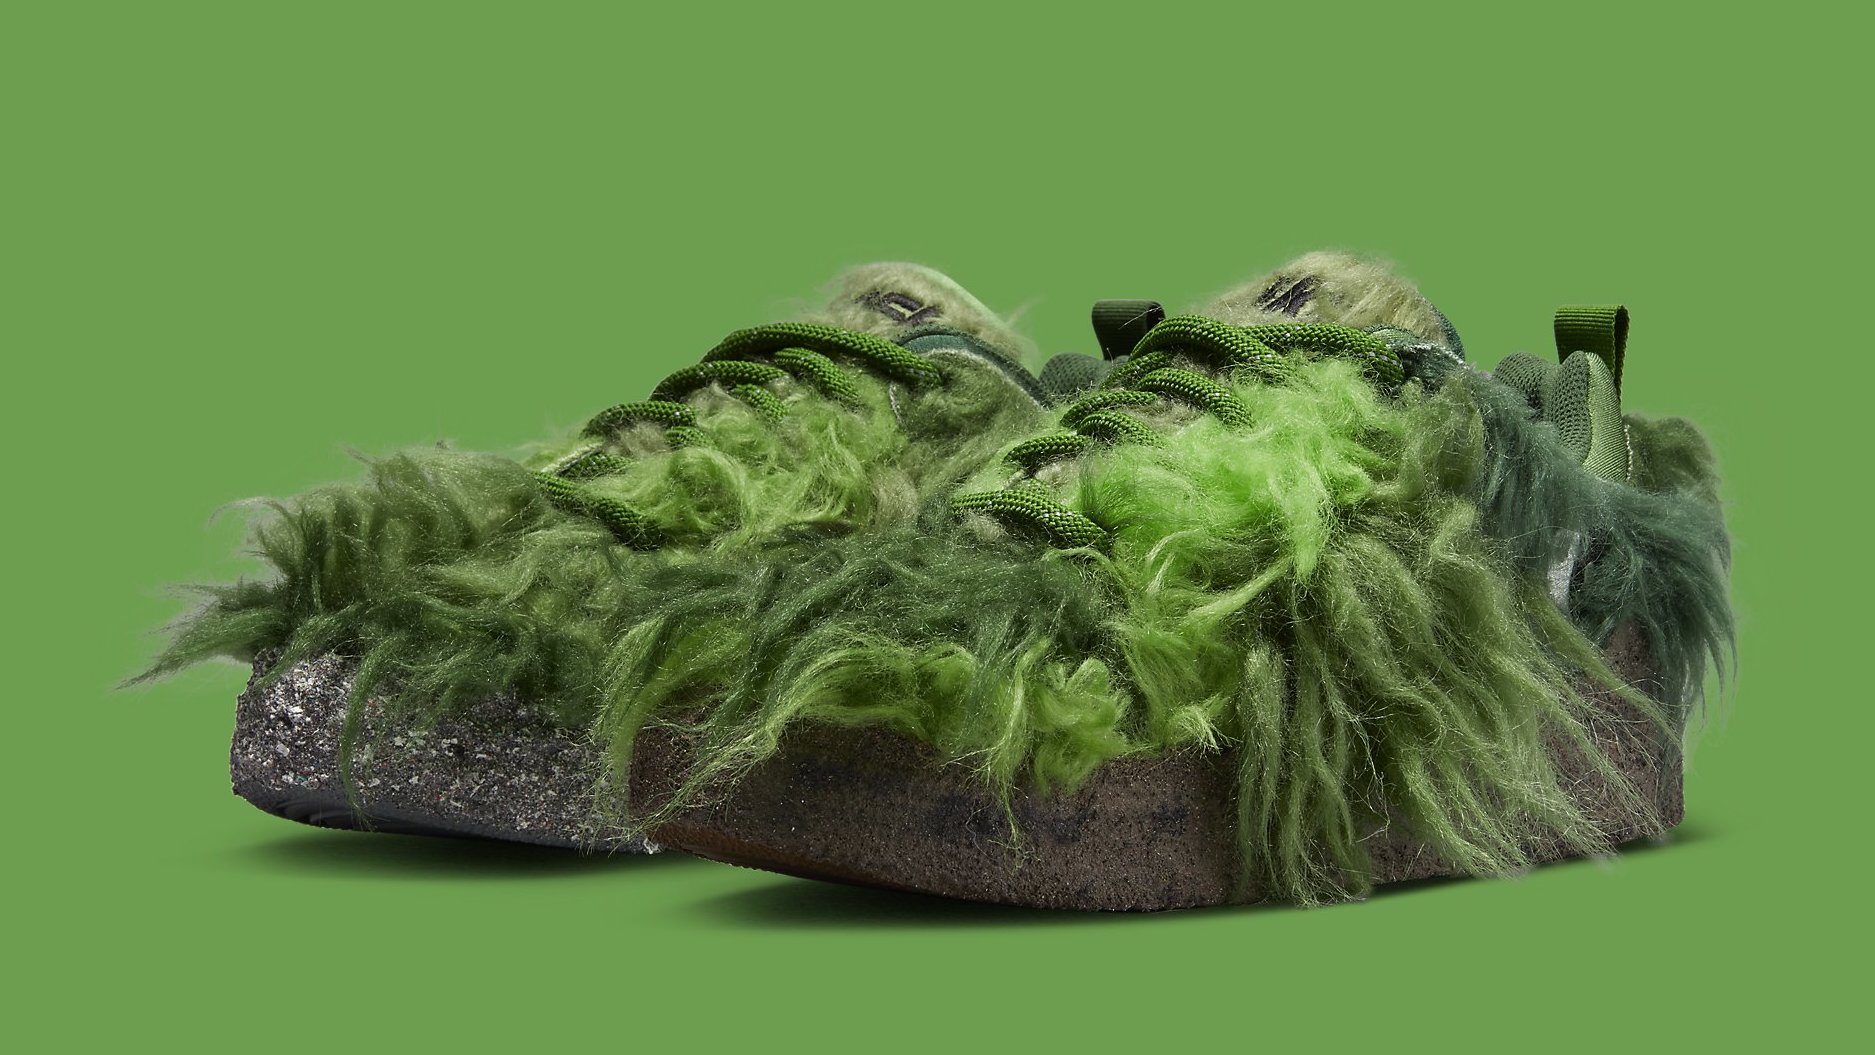 Cactus Plant Flea Market's Next Nike Collab Drops This Month